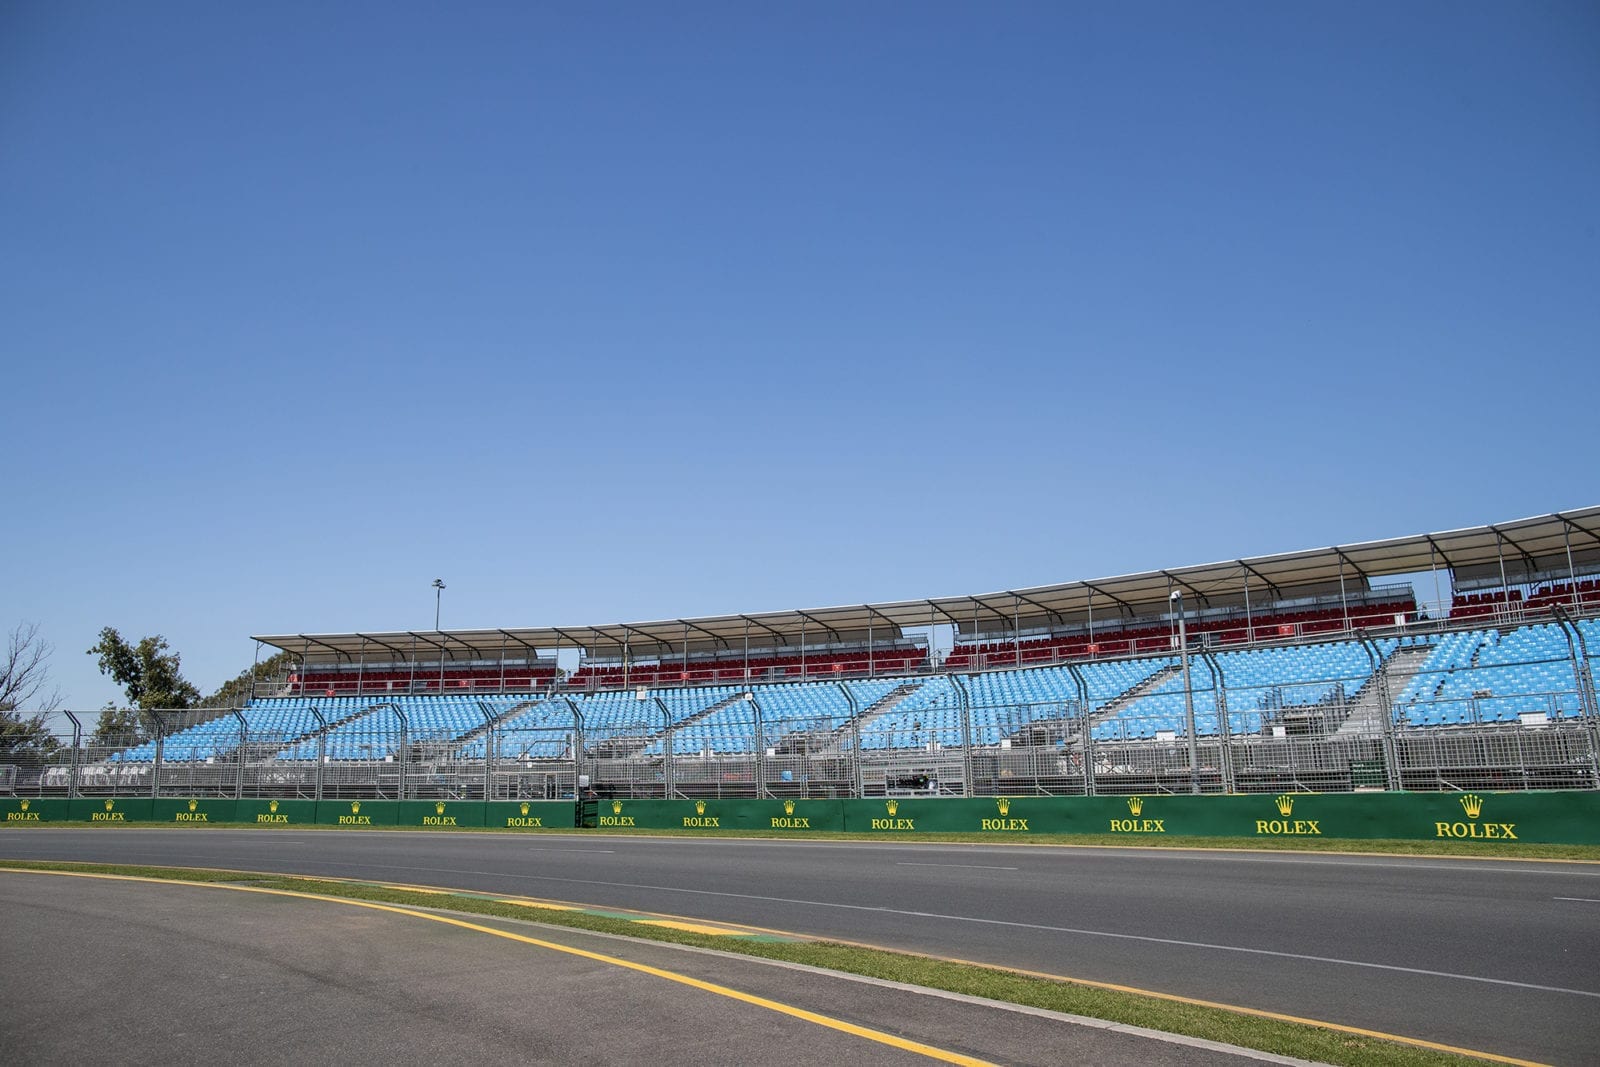 Empty grandstands at Albert Park ahead of the 2020 Australian Grand Prix